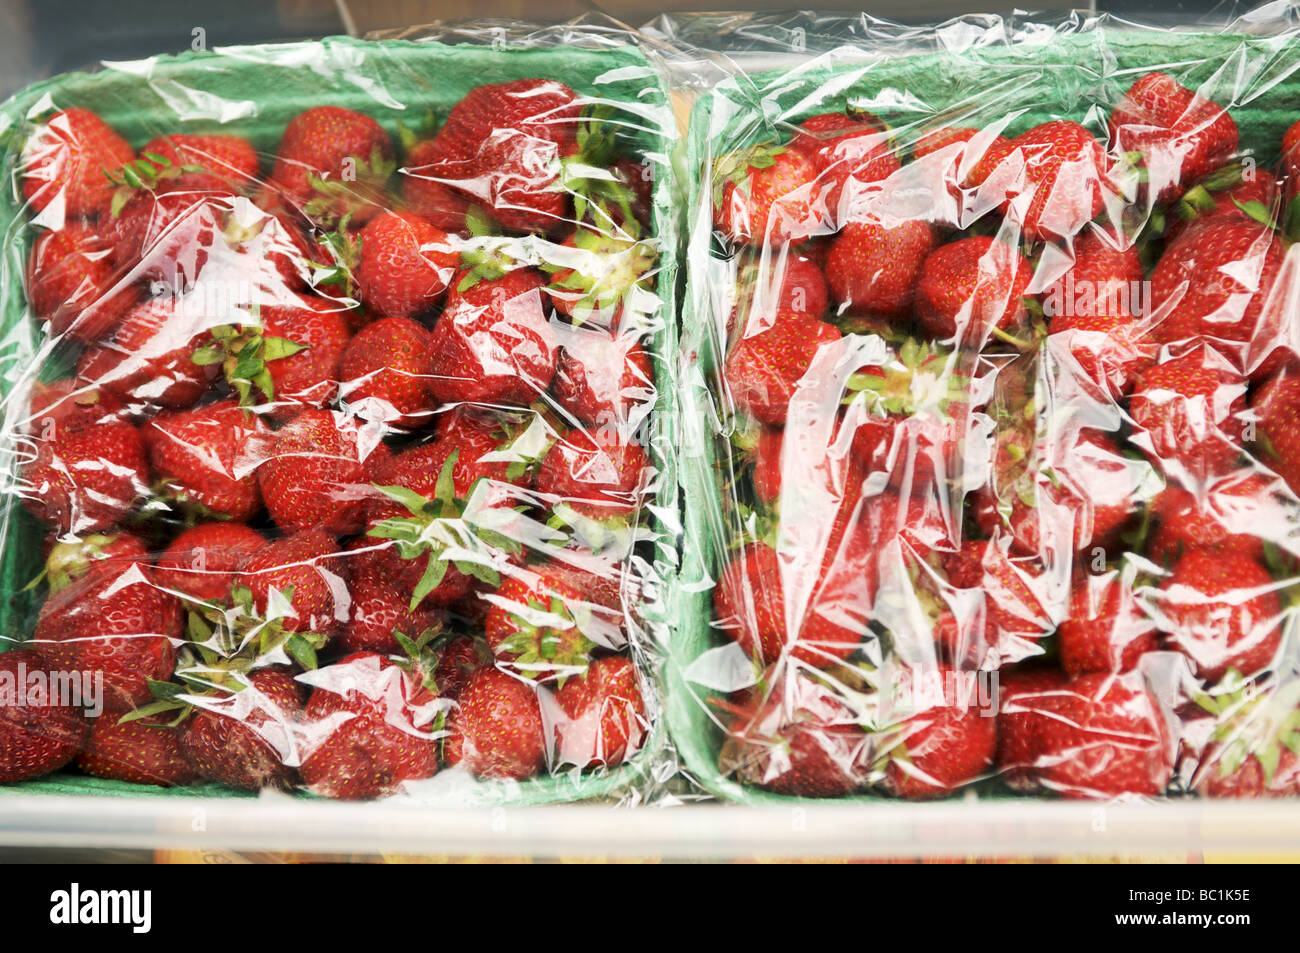 Plastic covered strawberries Stock Photo